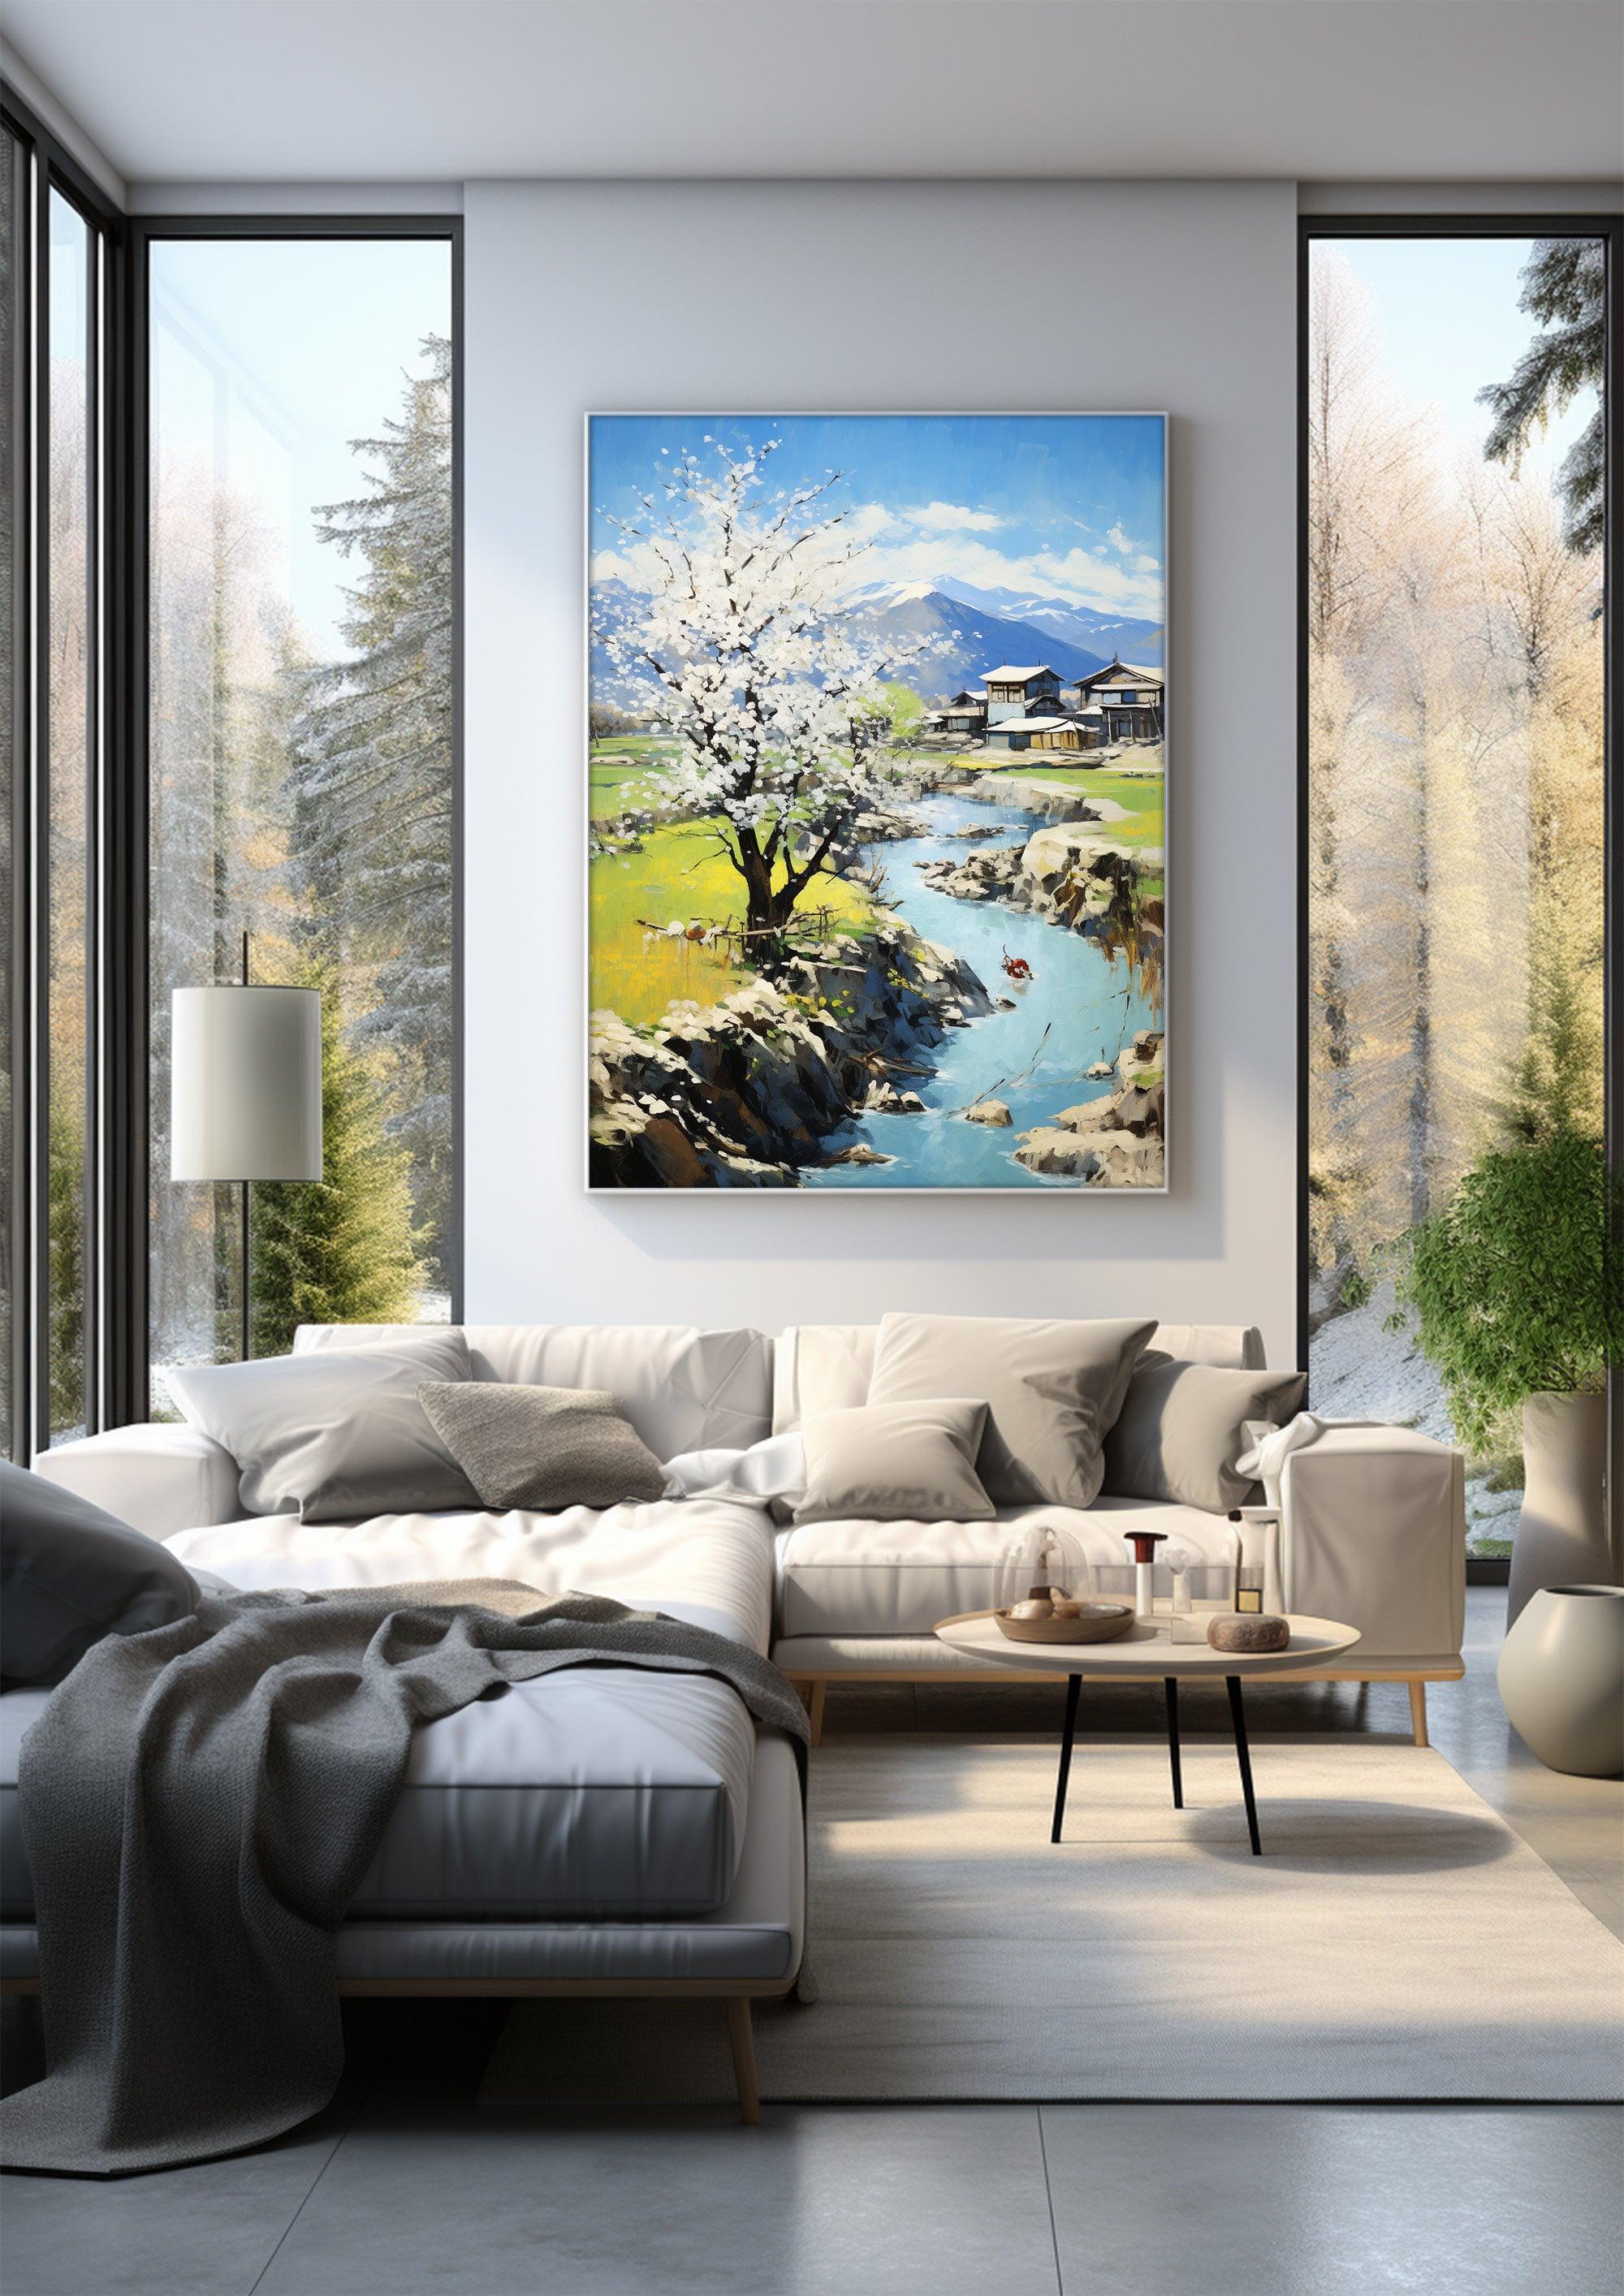 Landscape,Framed Fine Art Paper Prints,Living Room Decor,High-Quality professional Giclee technique #12